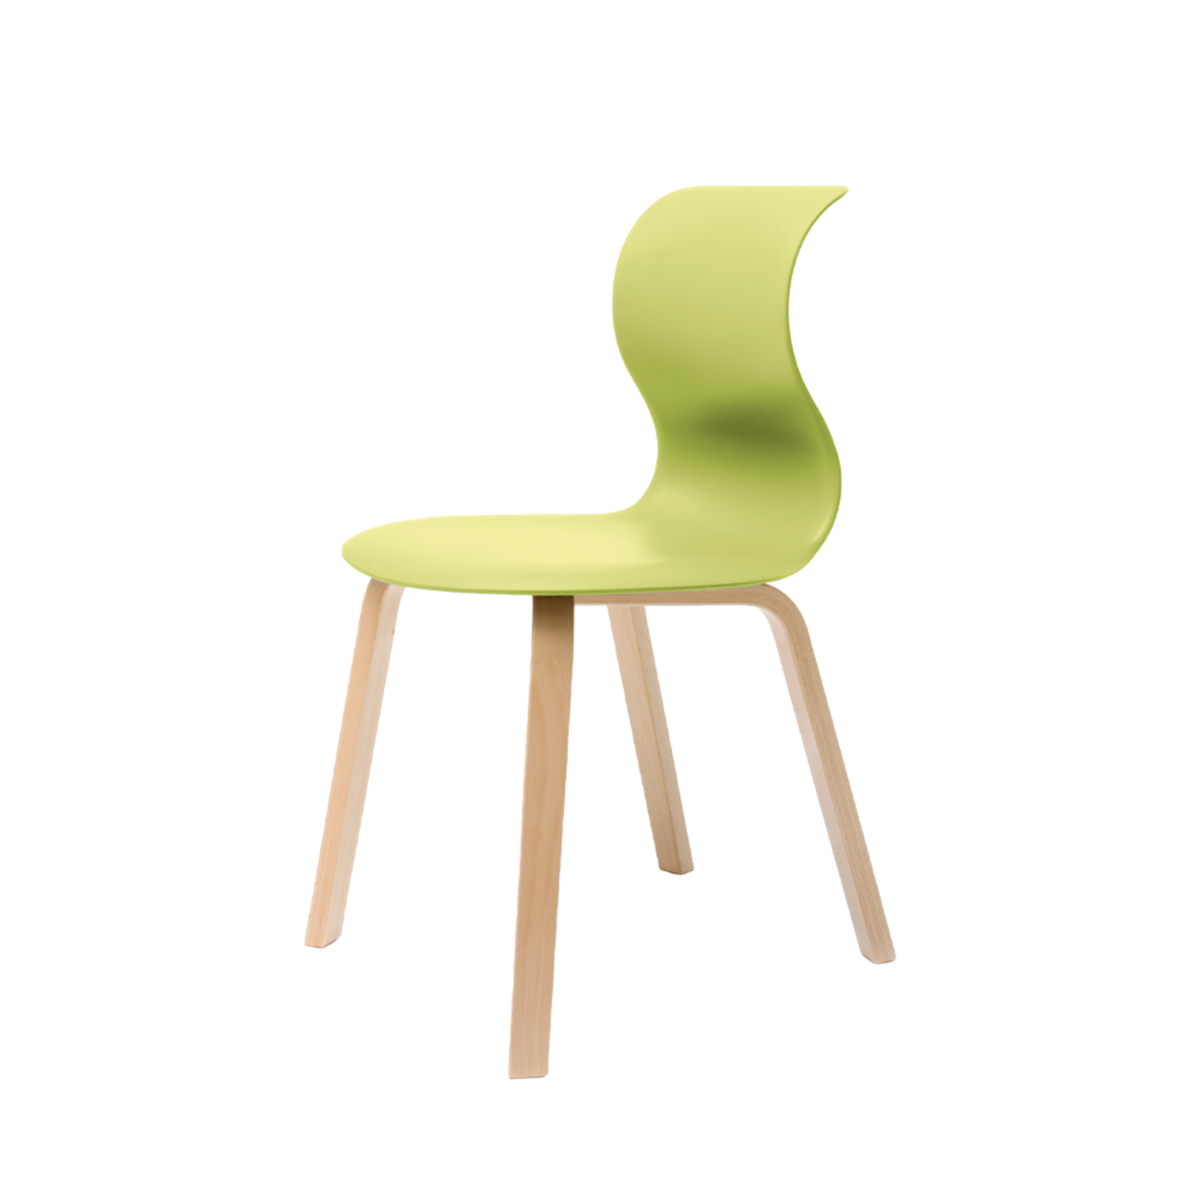 Pro 6 (Wood Leg) Chair